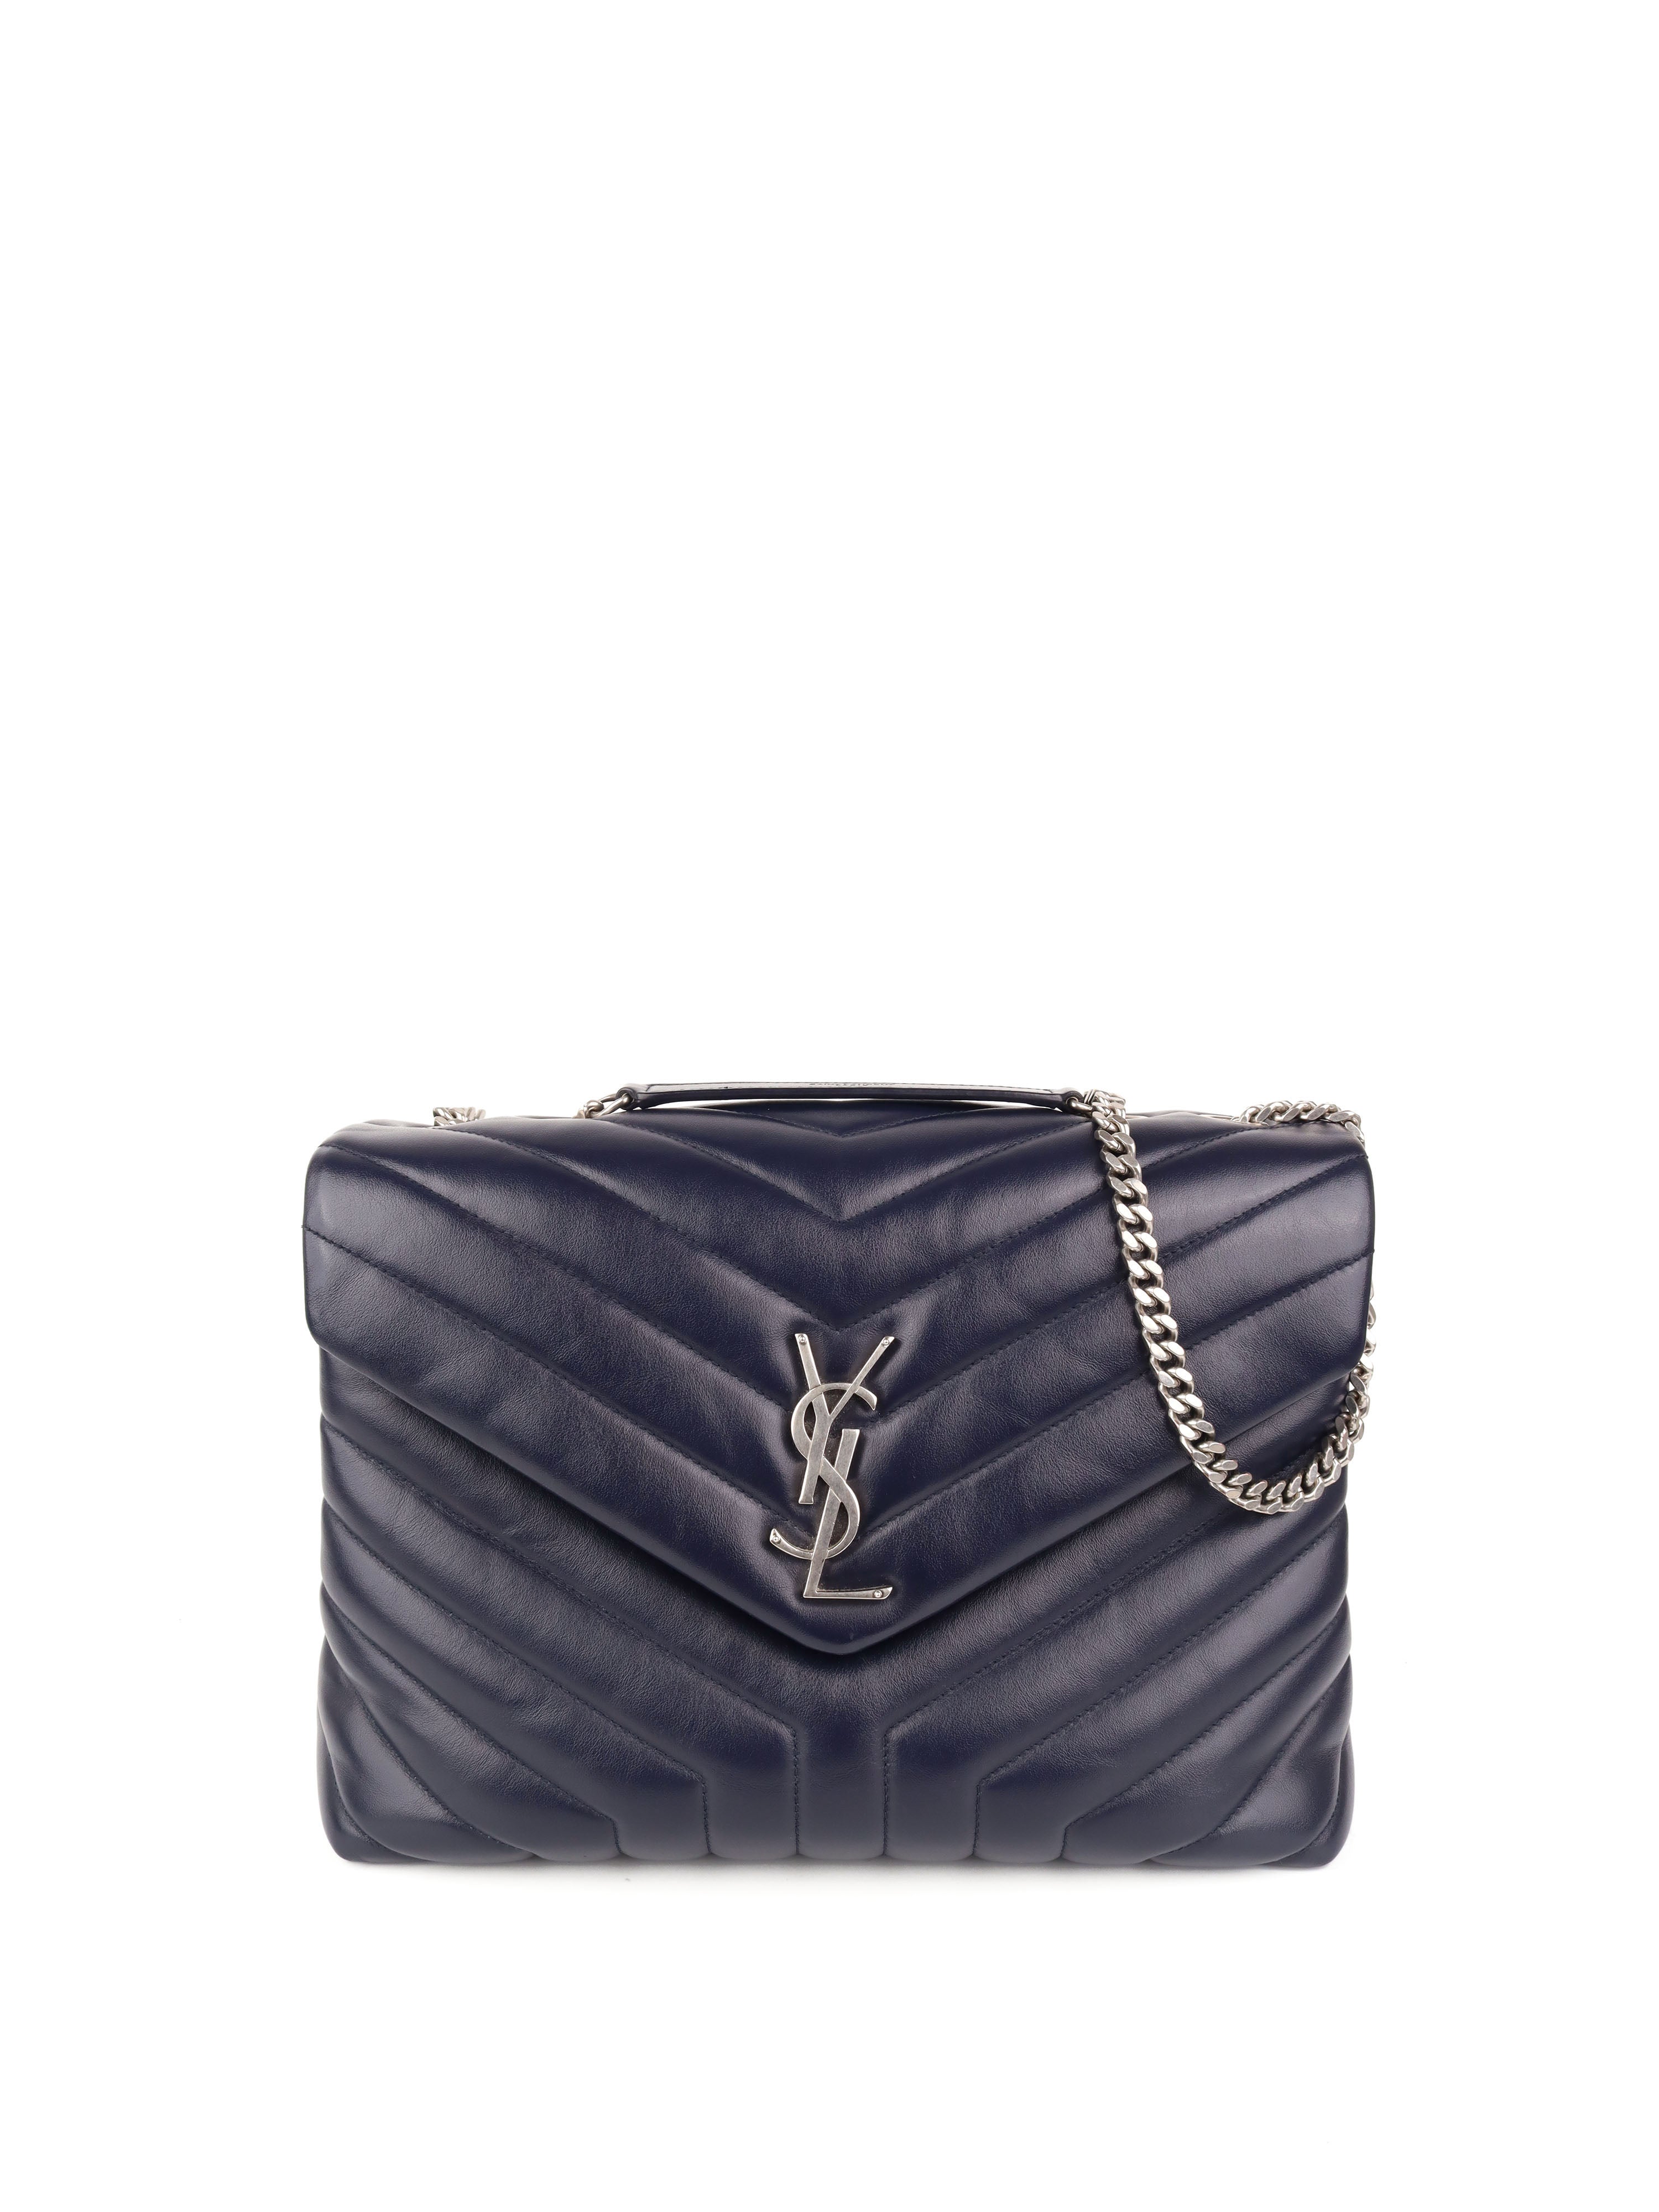 Saint Laurent Cassandra Medium Top Handle Bag in Grain de Poudre Embossed  Leather | Cosette